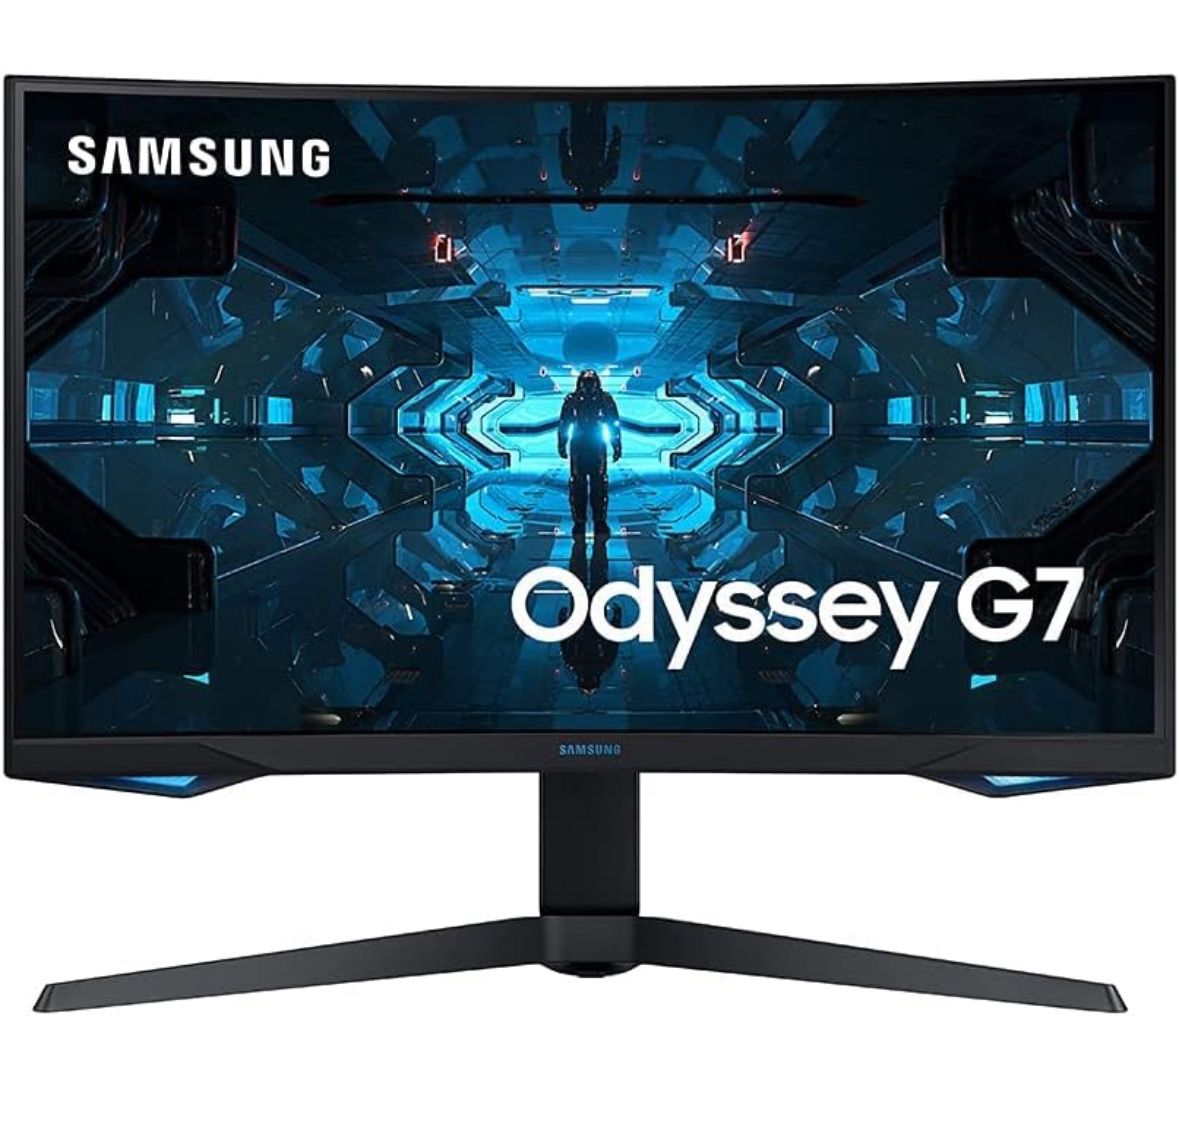 Samsung Odyssey G7 32" 16:9 240 Hz Curved VA G-SYNC HDR Gaming Monitor